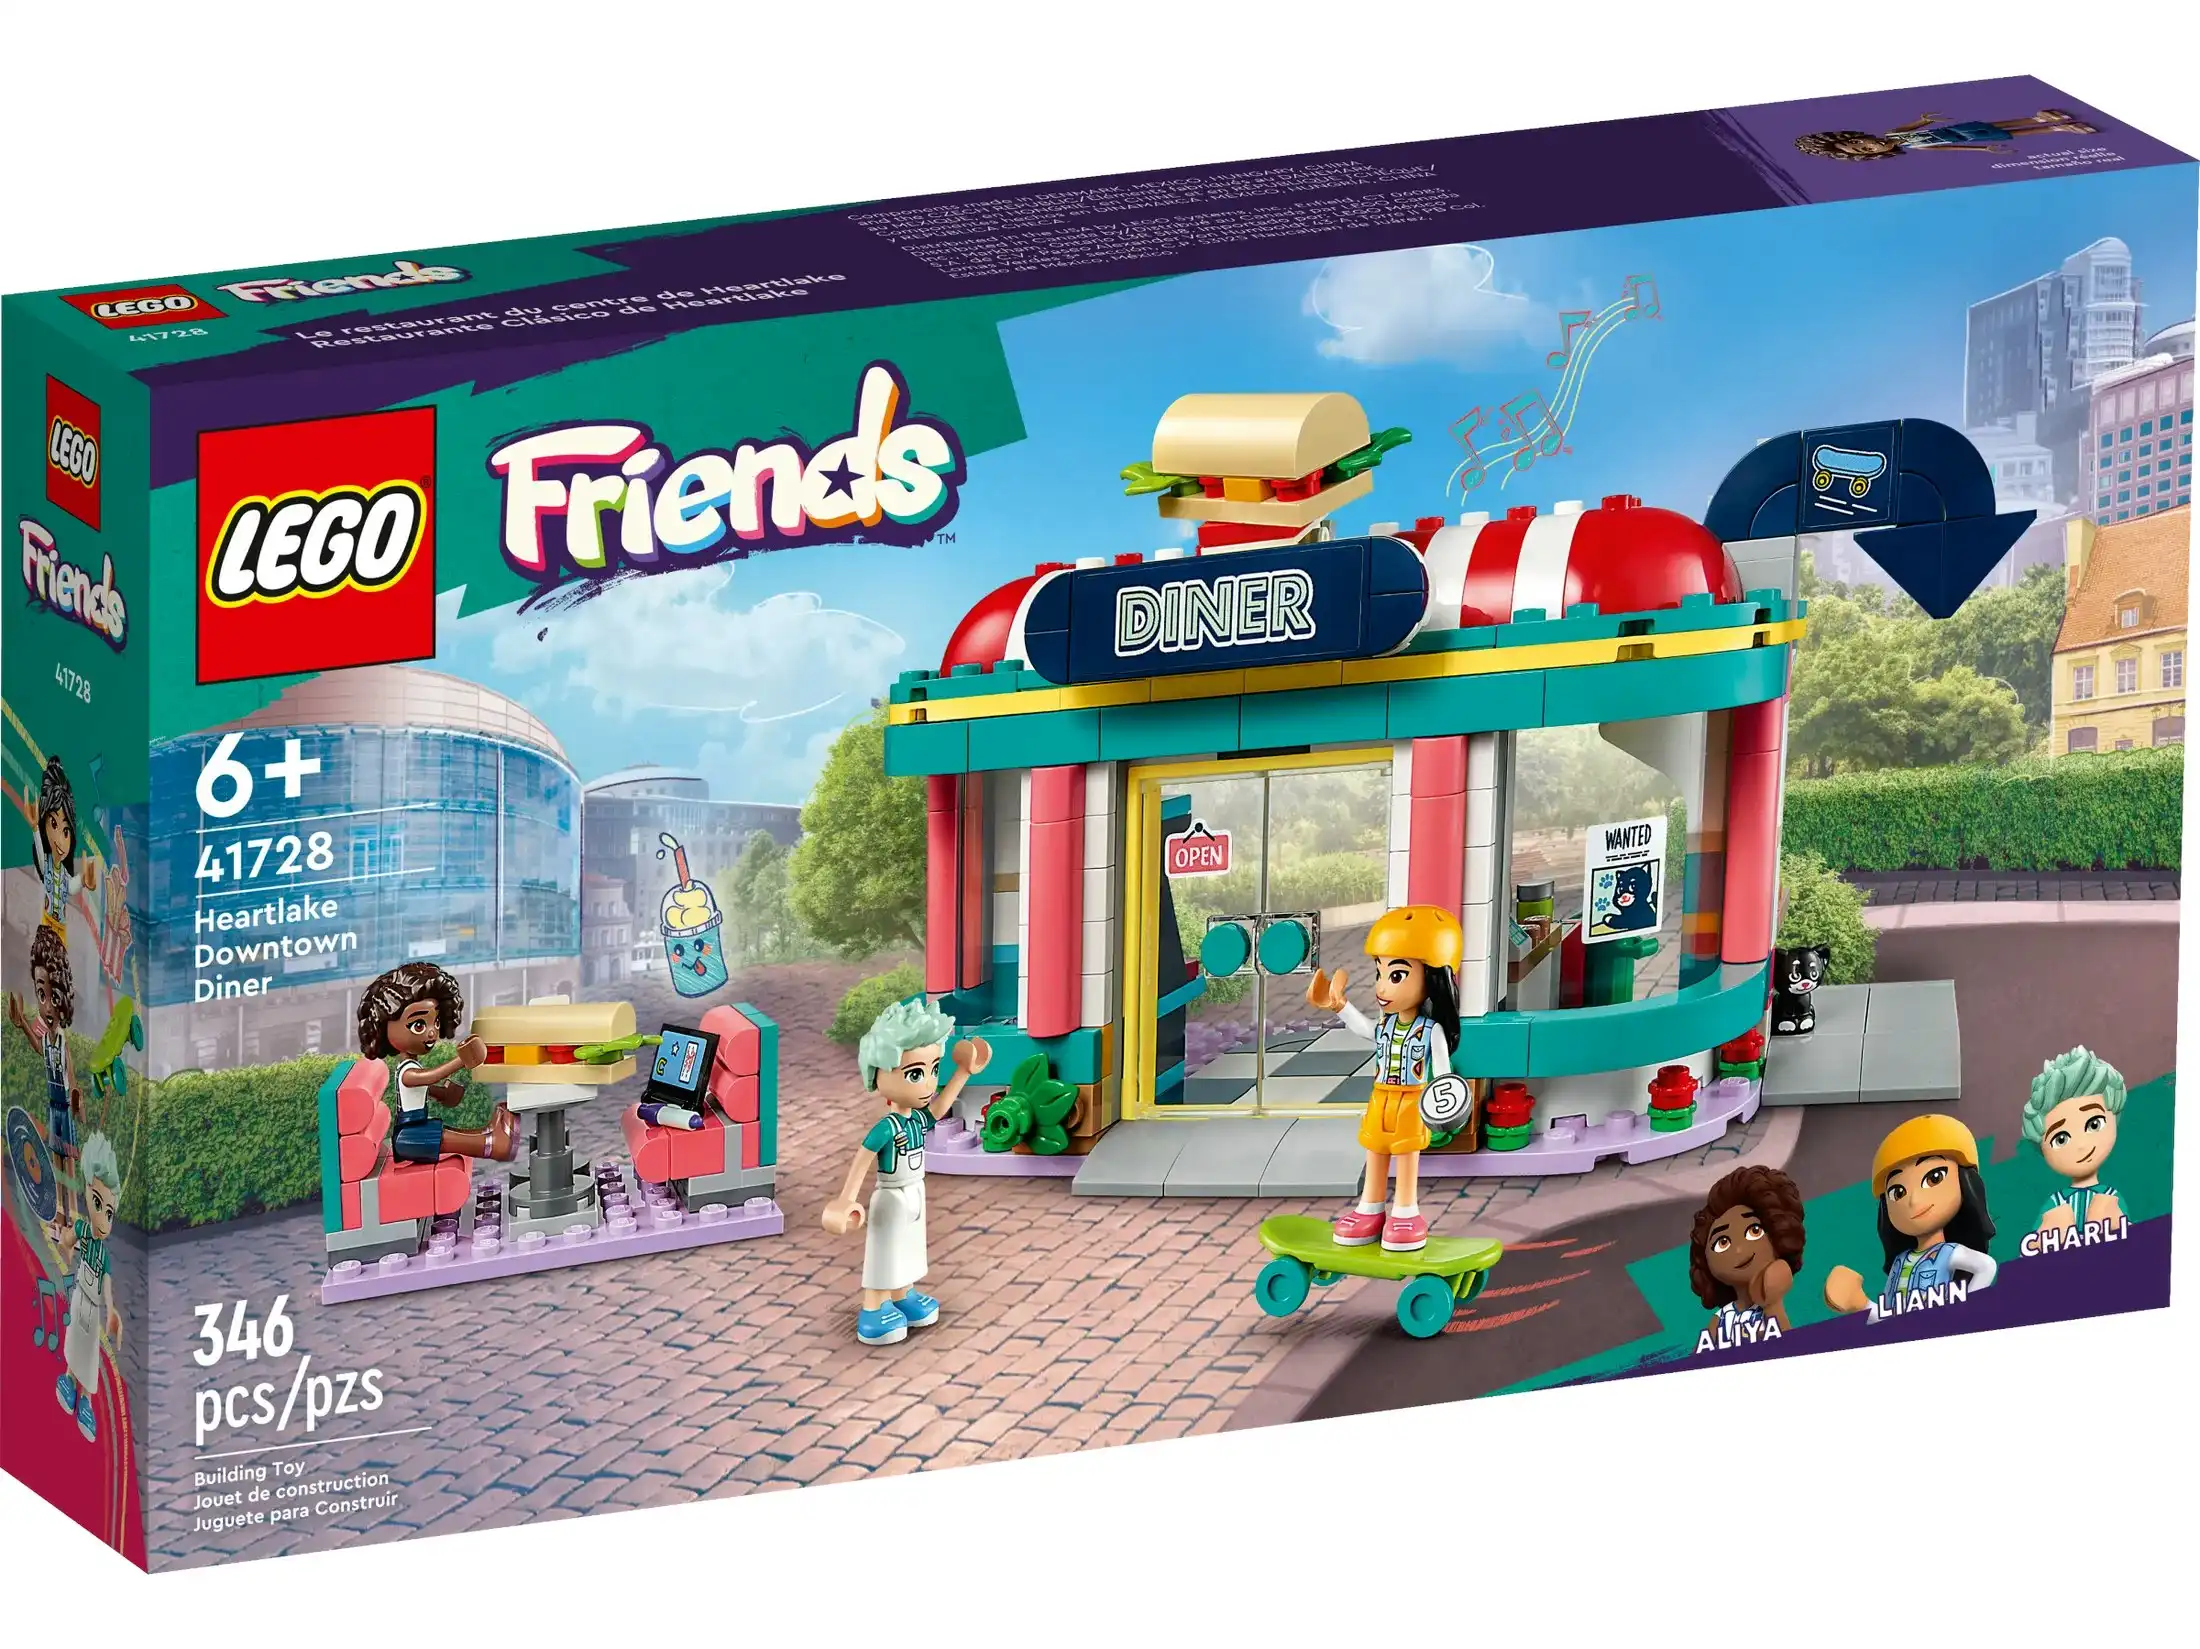 LEGO 41728 Heartlake Downtown Diner - Friends